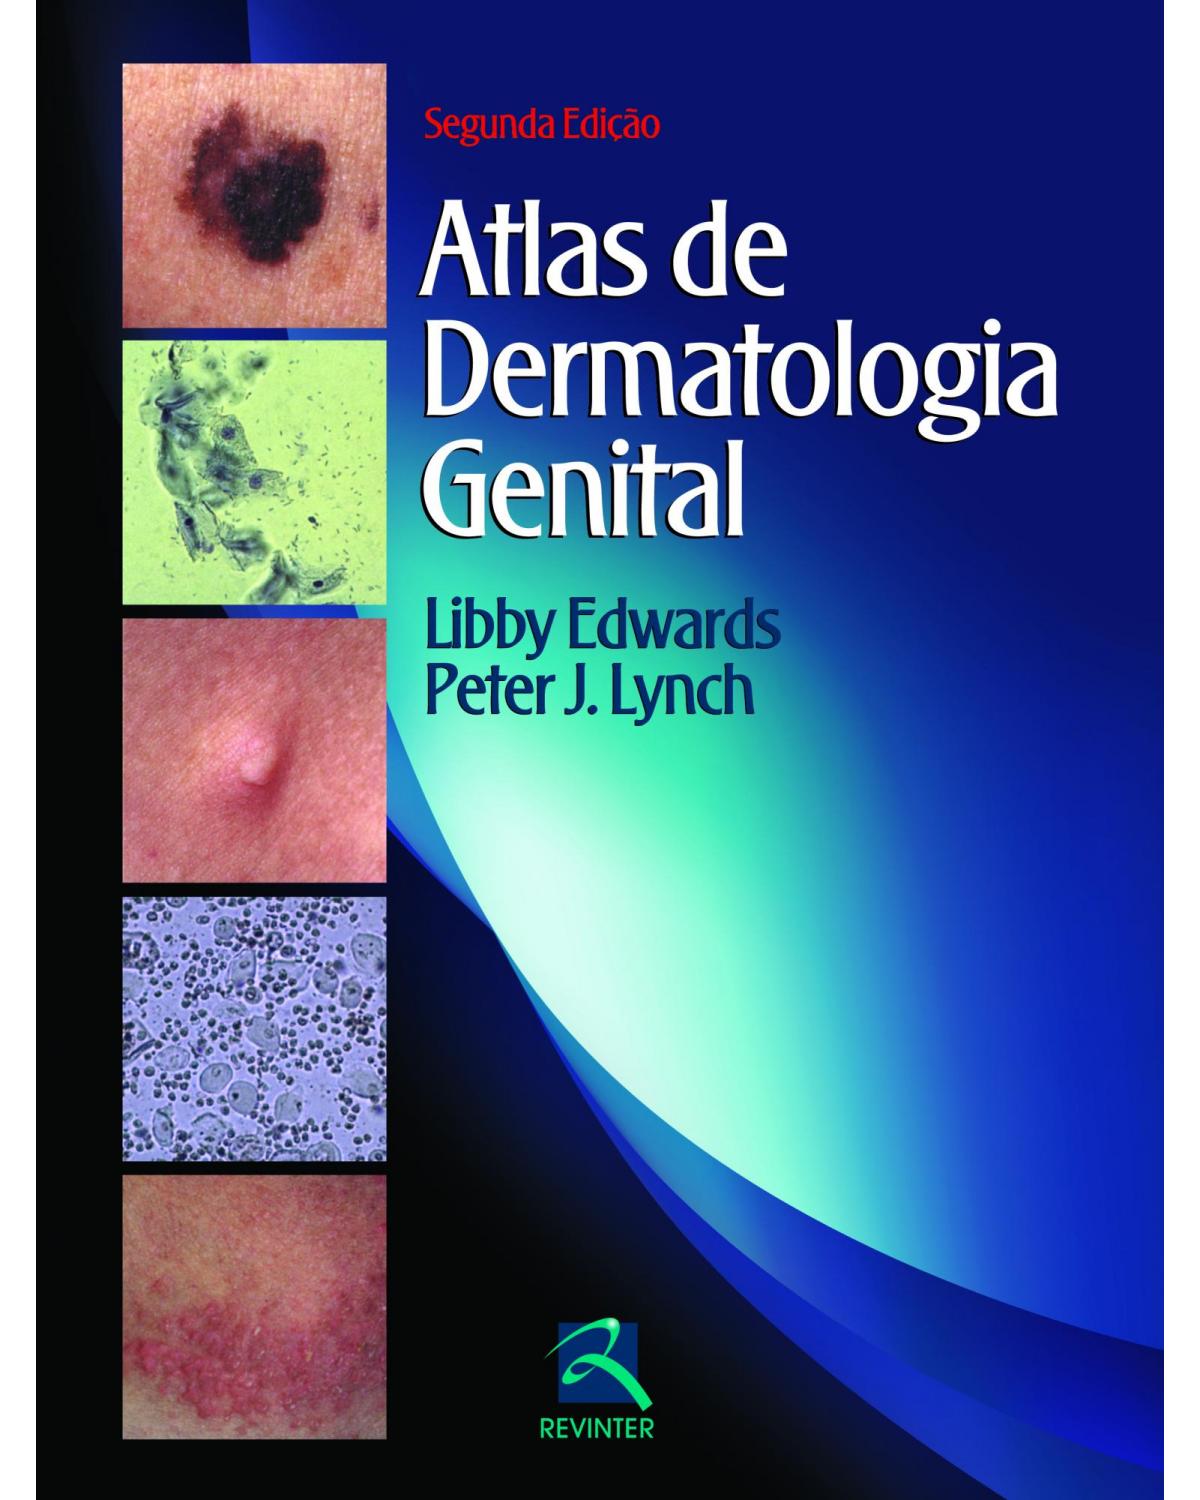 Atlas de dermatologia genital - 2ª Edição | 2012